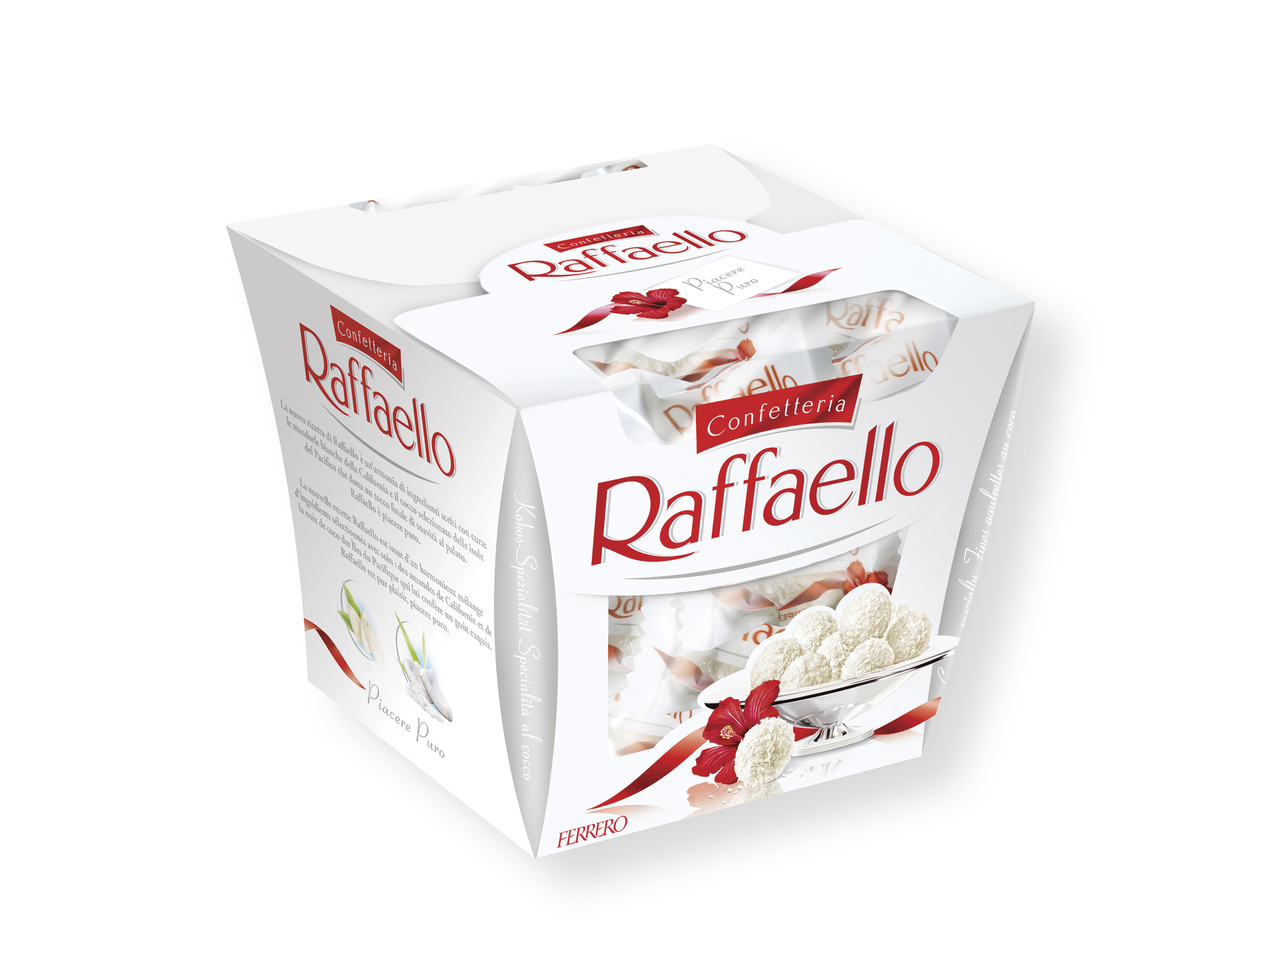 'Ferrero(R)' Raffaello